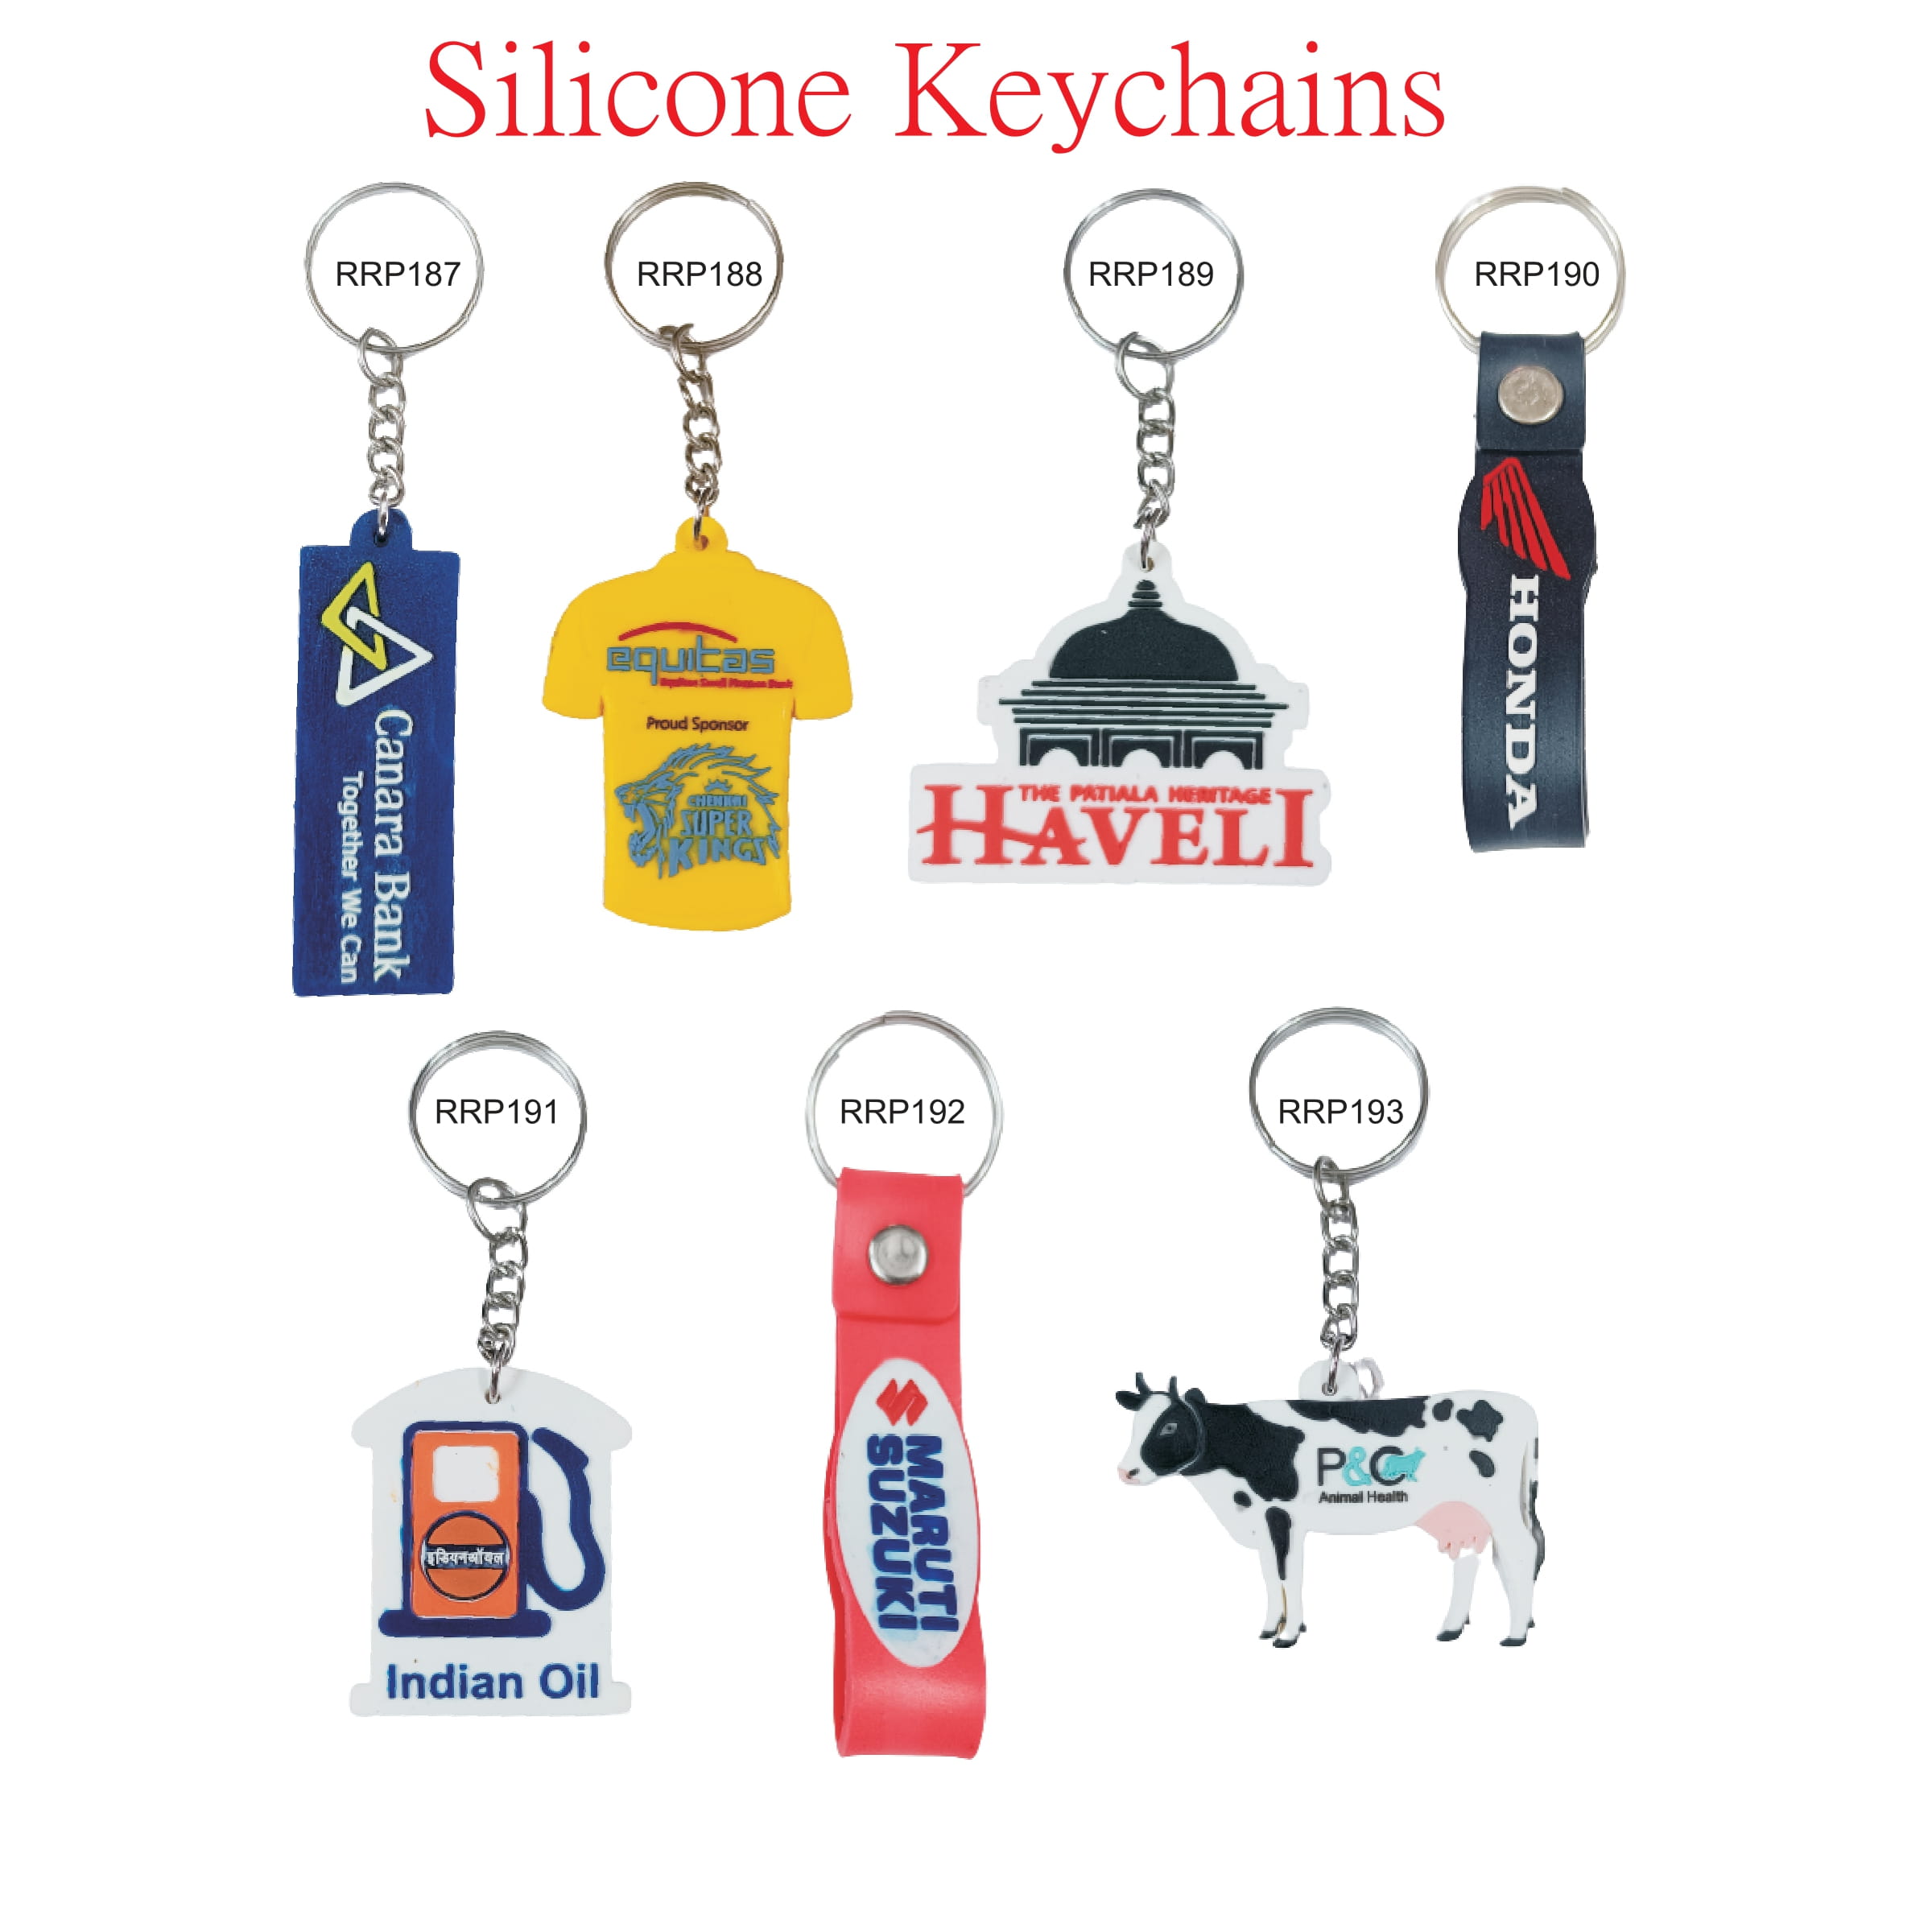 Silicon Keychain